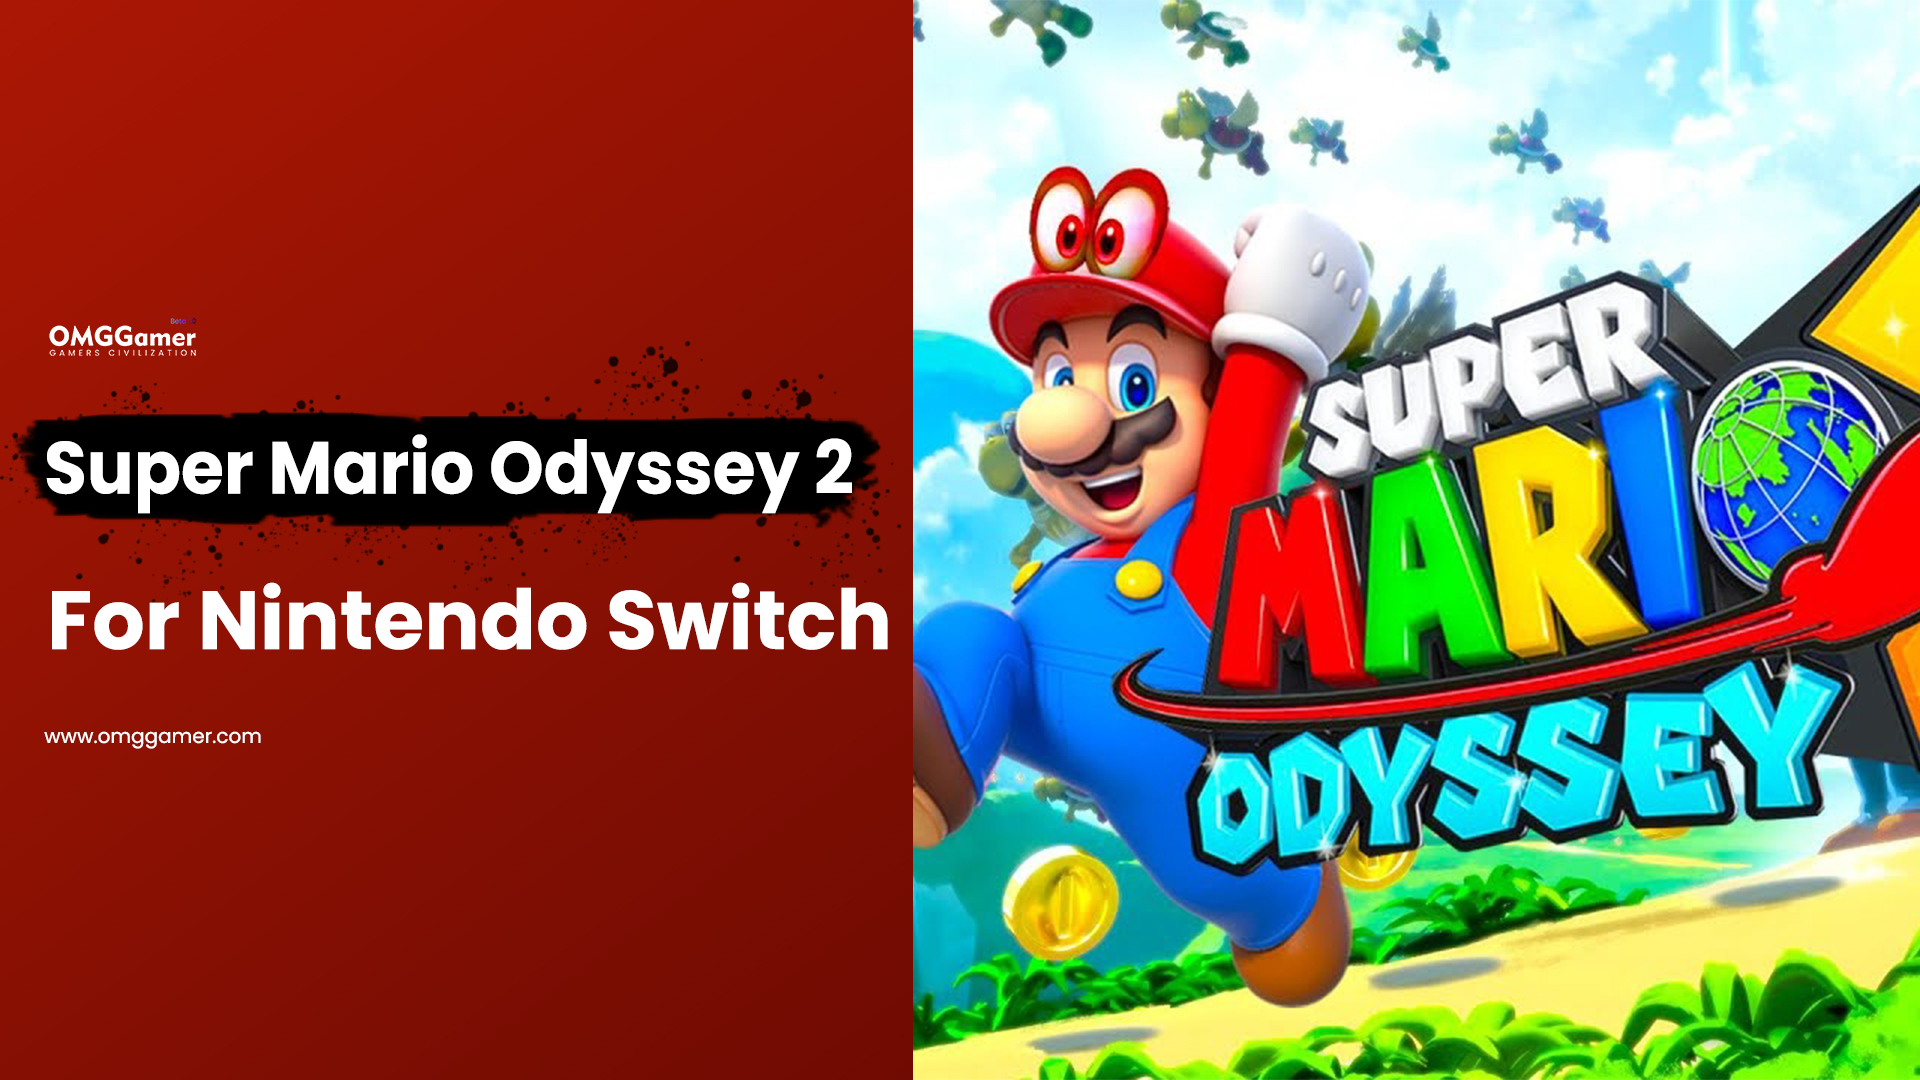 Super Mario Odyssey 2 for Nintendo Switch